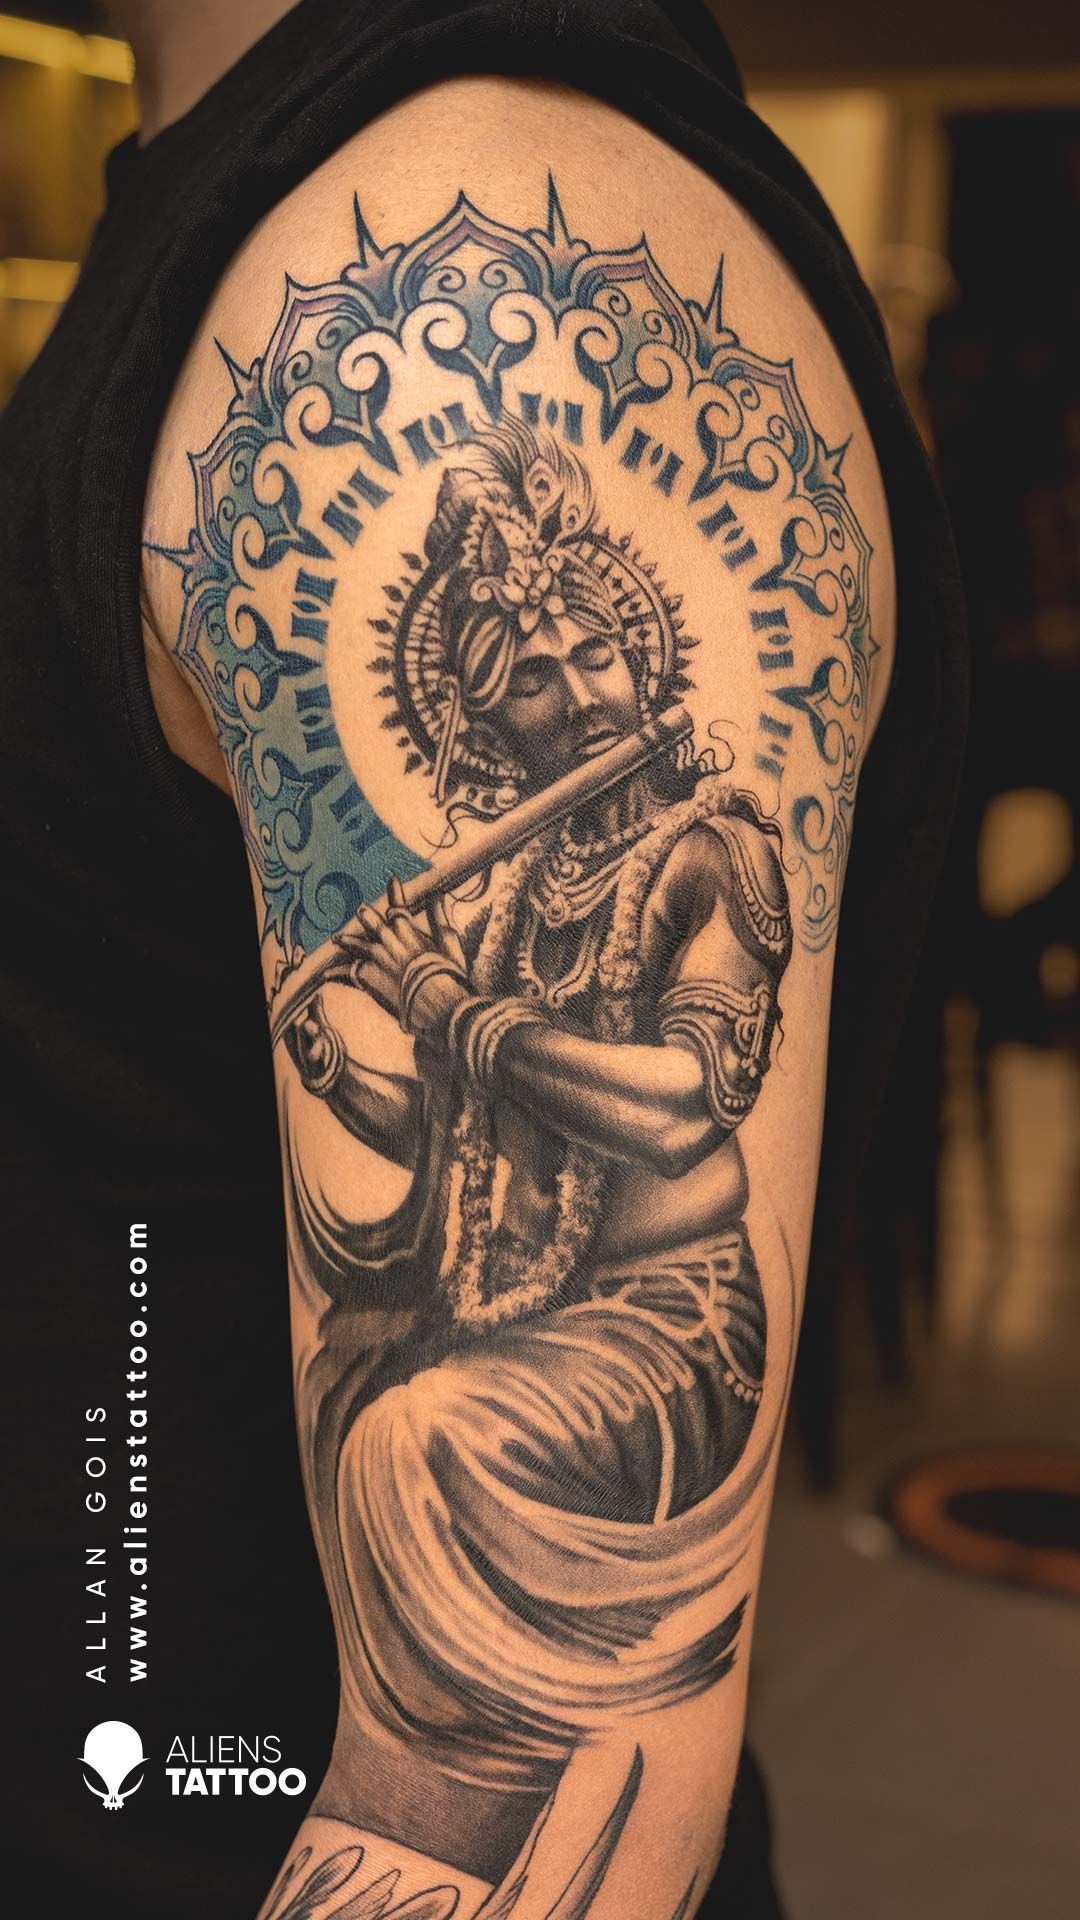 Aliens Tattoo in SeawoodsMumbai  Best Tattoo Artists in Mumbai  Justdial